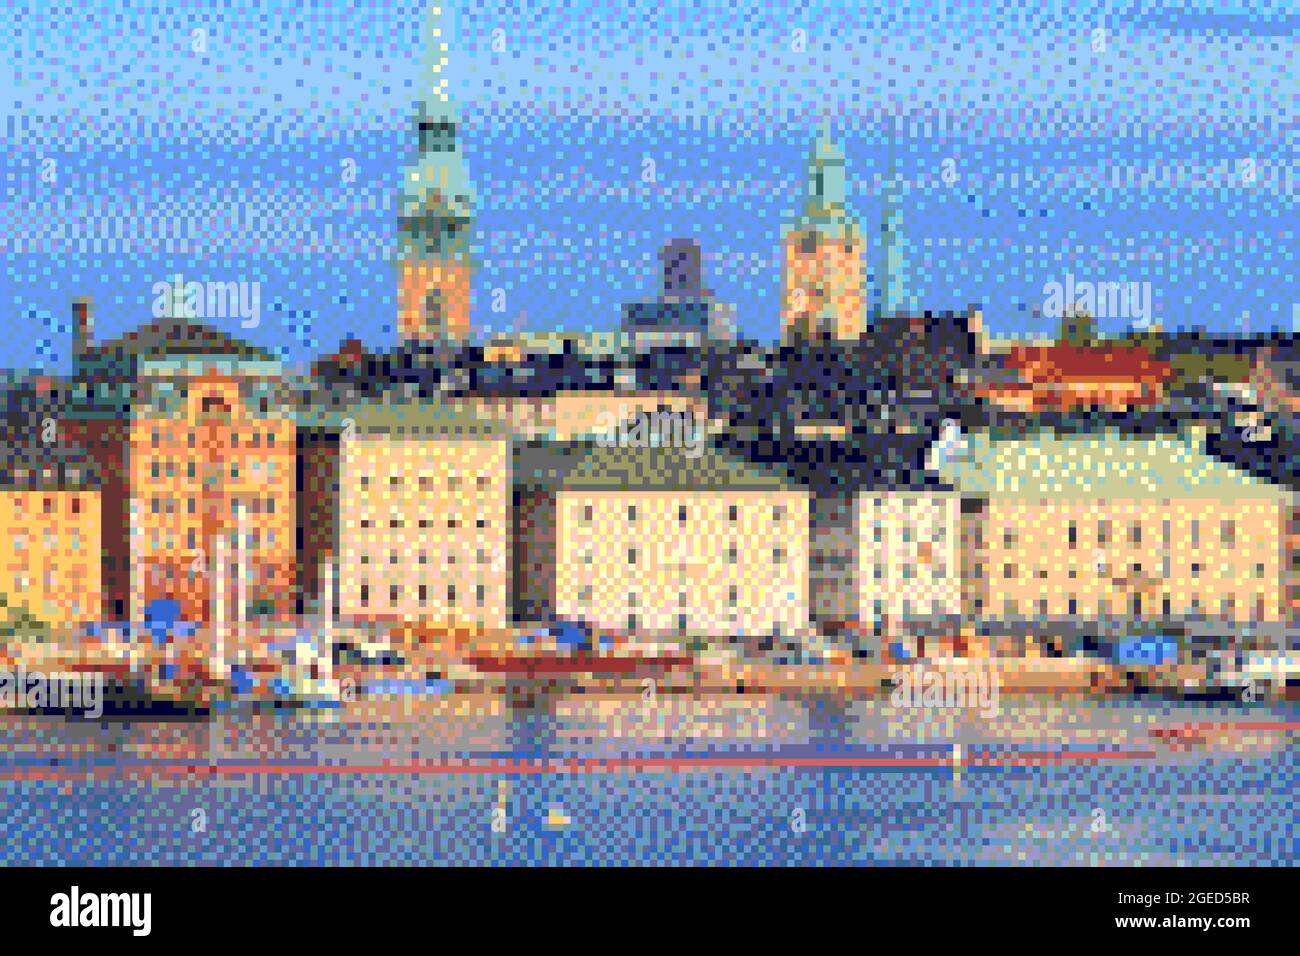 Pixel art 8-bit style graphics. Stockholm city, Sweden. Stock Photo